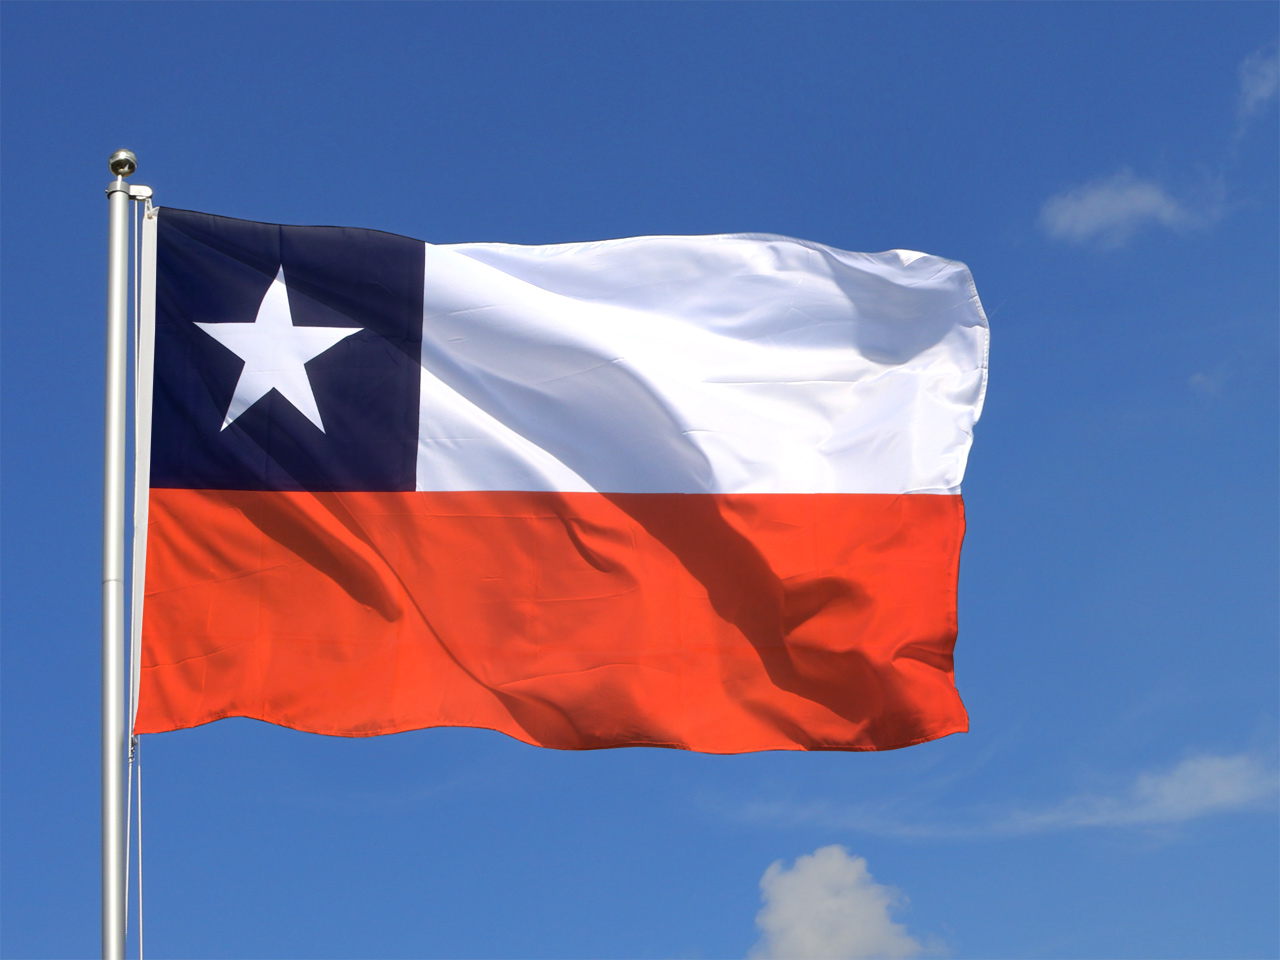 Fahnen Flagge Flaggenkette Chile 6 Meter Lang